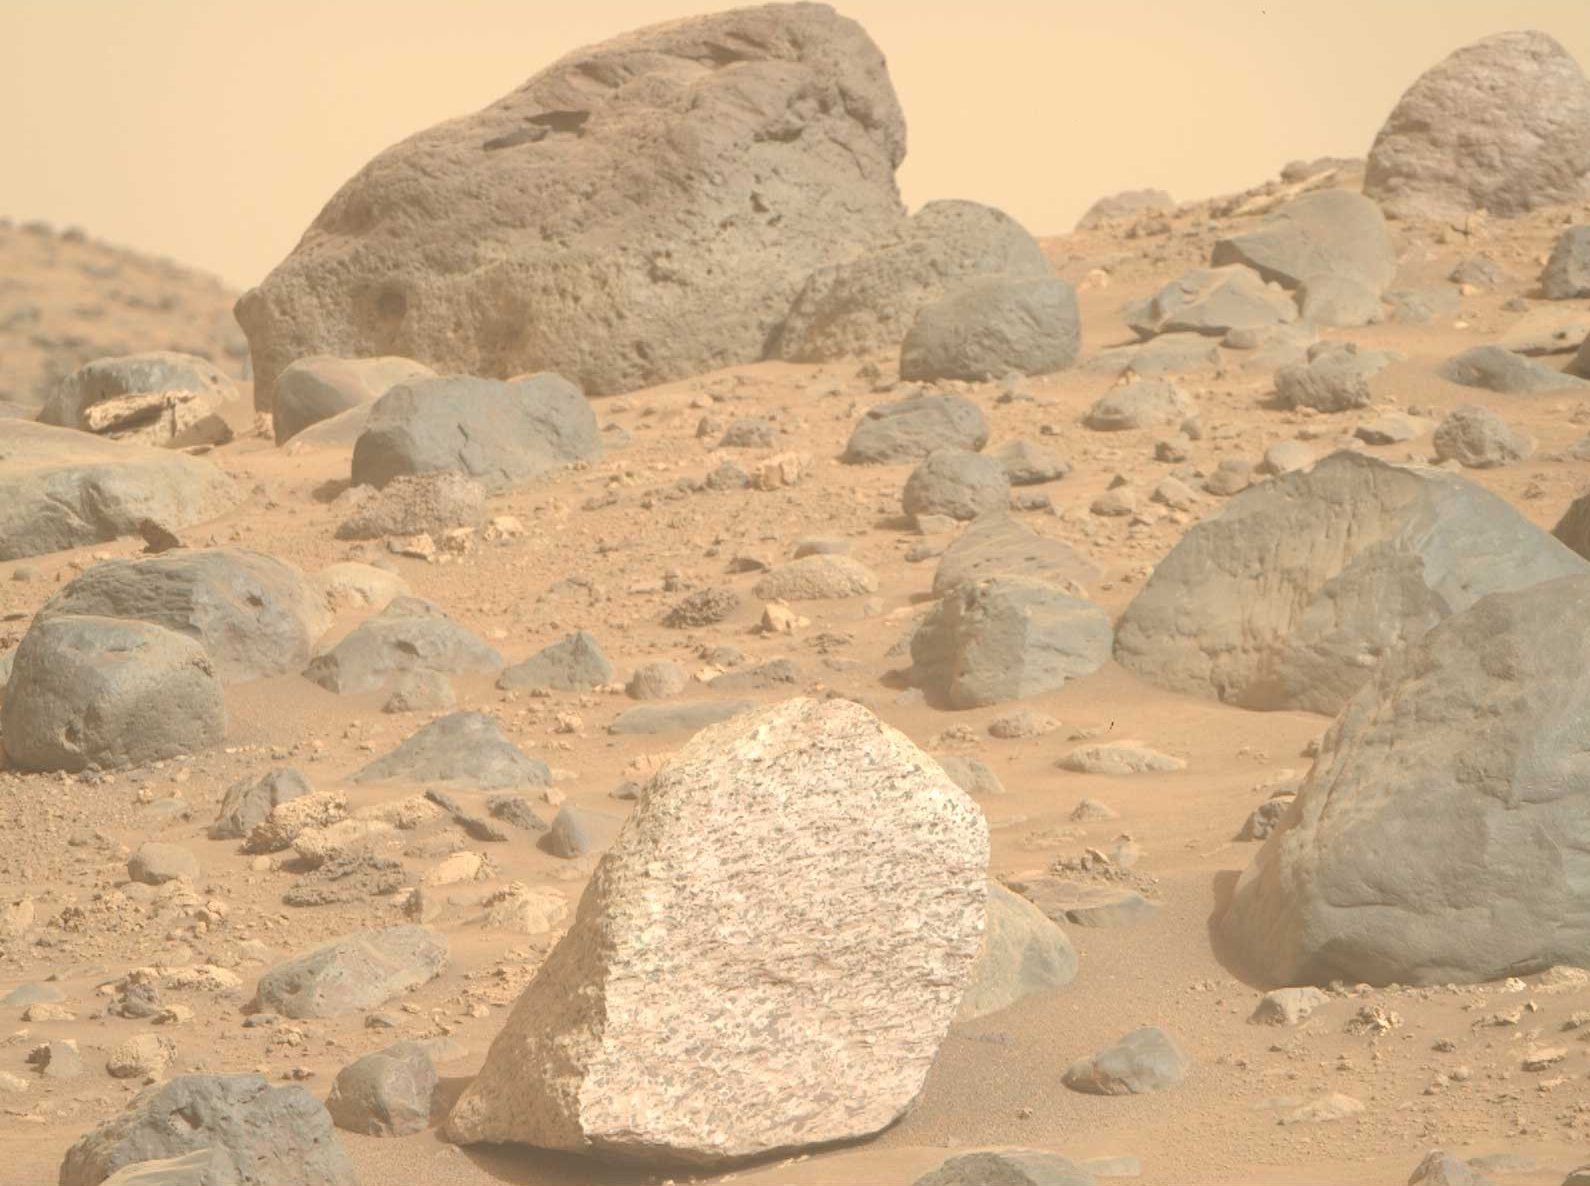 Images of large rocks on Mars.